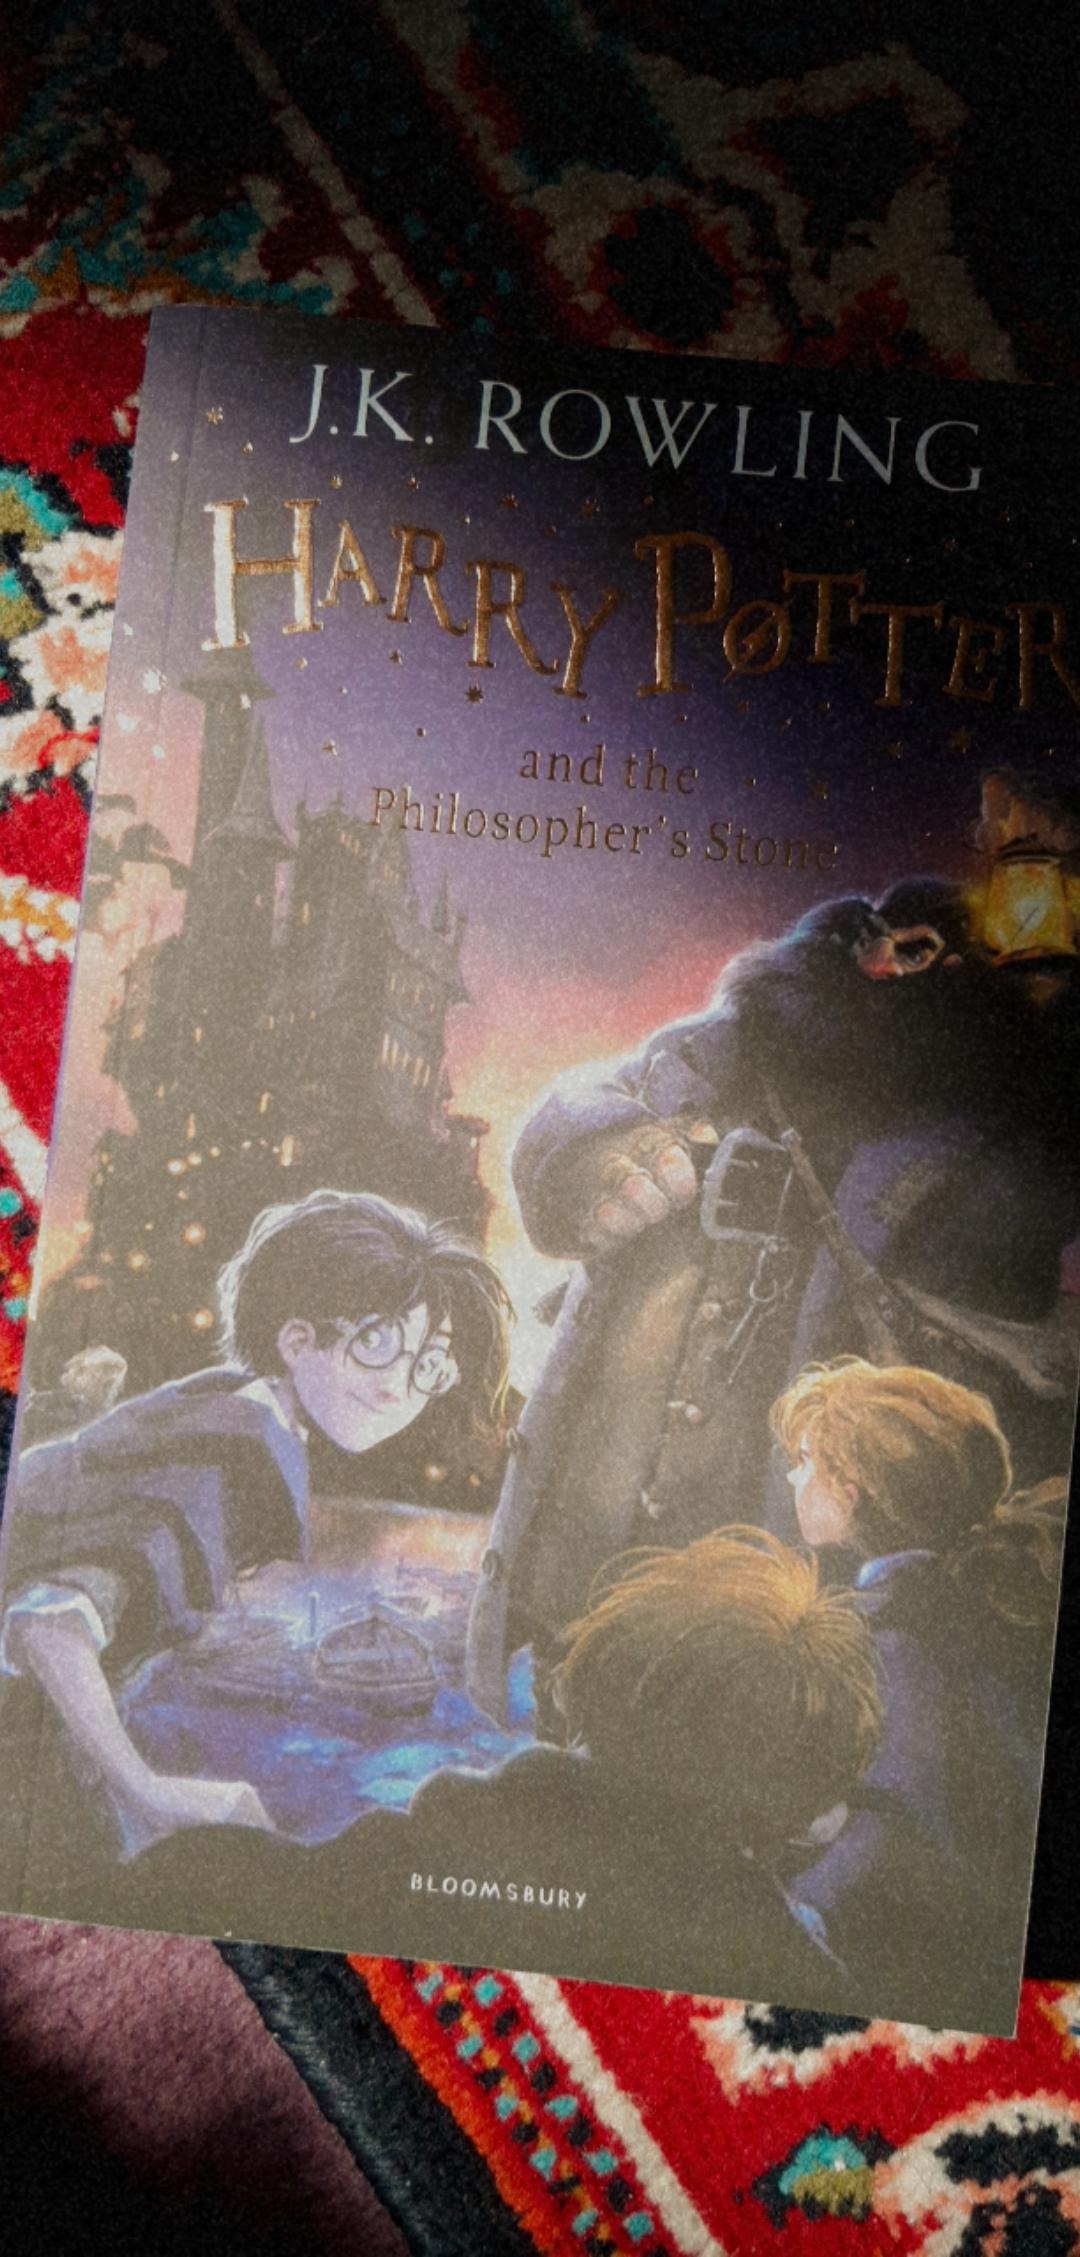 کتاب Harry Potter اثر J.K. Rowling هفت جلدی